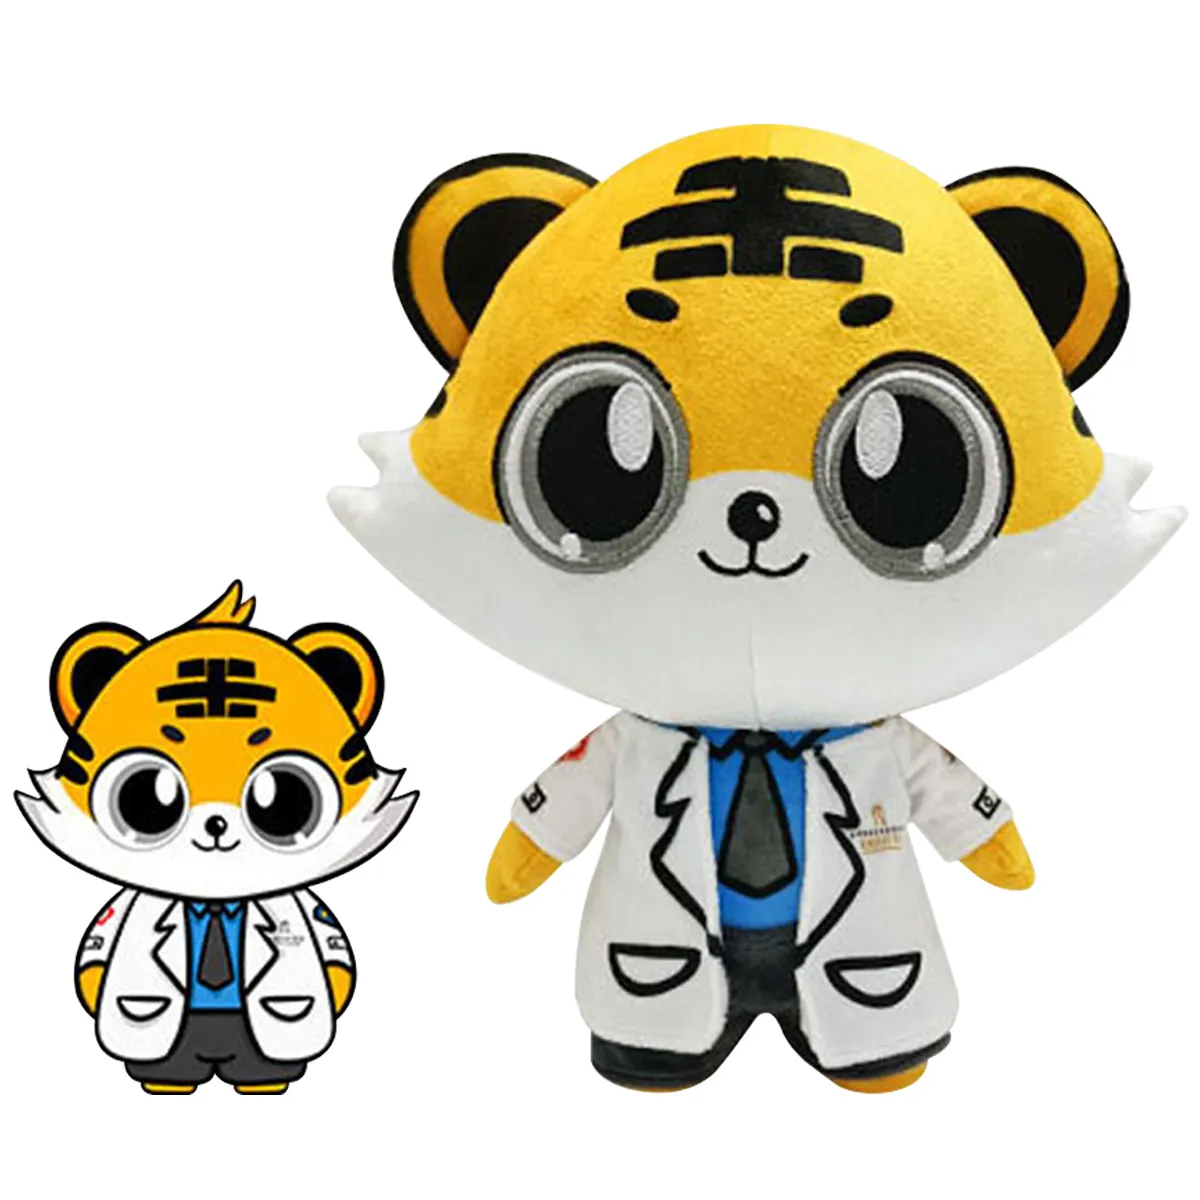 CustomPlushMaker kustom boneka hewan boneka harimau dibuat sesuai pesanan mainan hewan mewah yang dapat disesuaikan maskot kustomisasi hewan